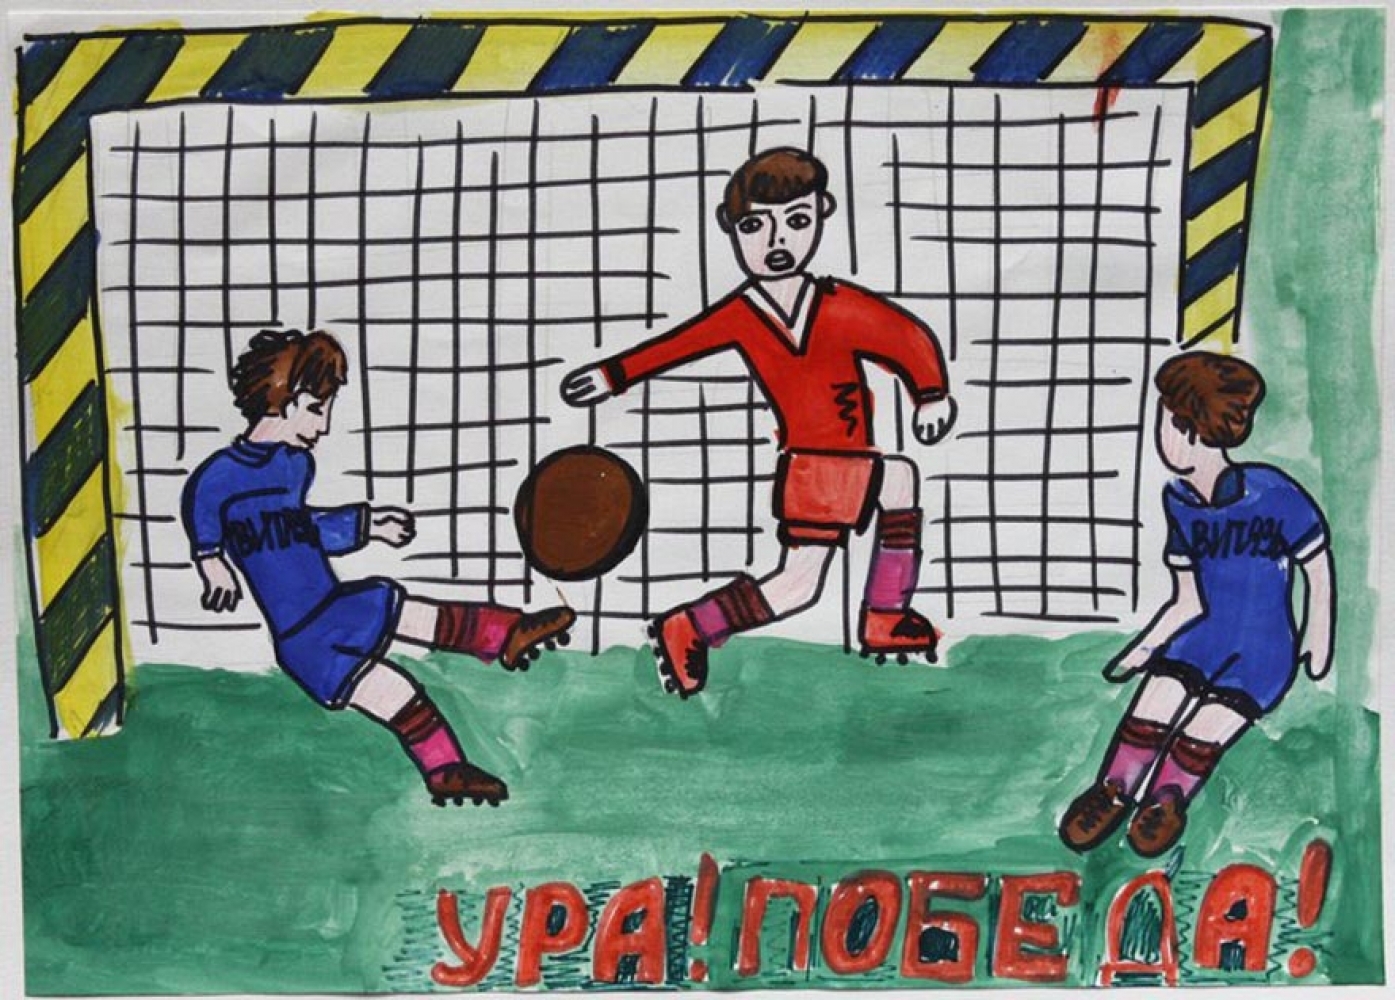 Рисунки на тему футбол для детей